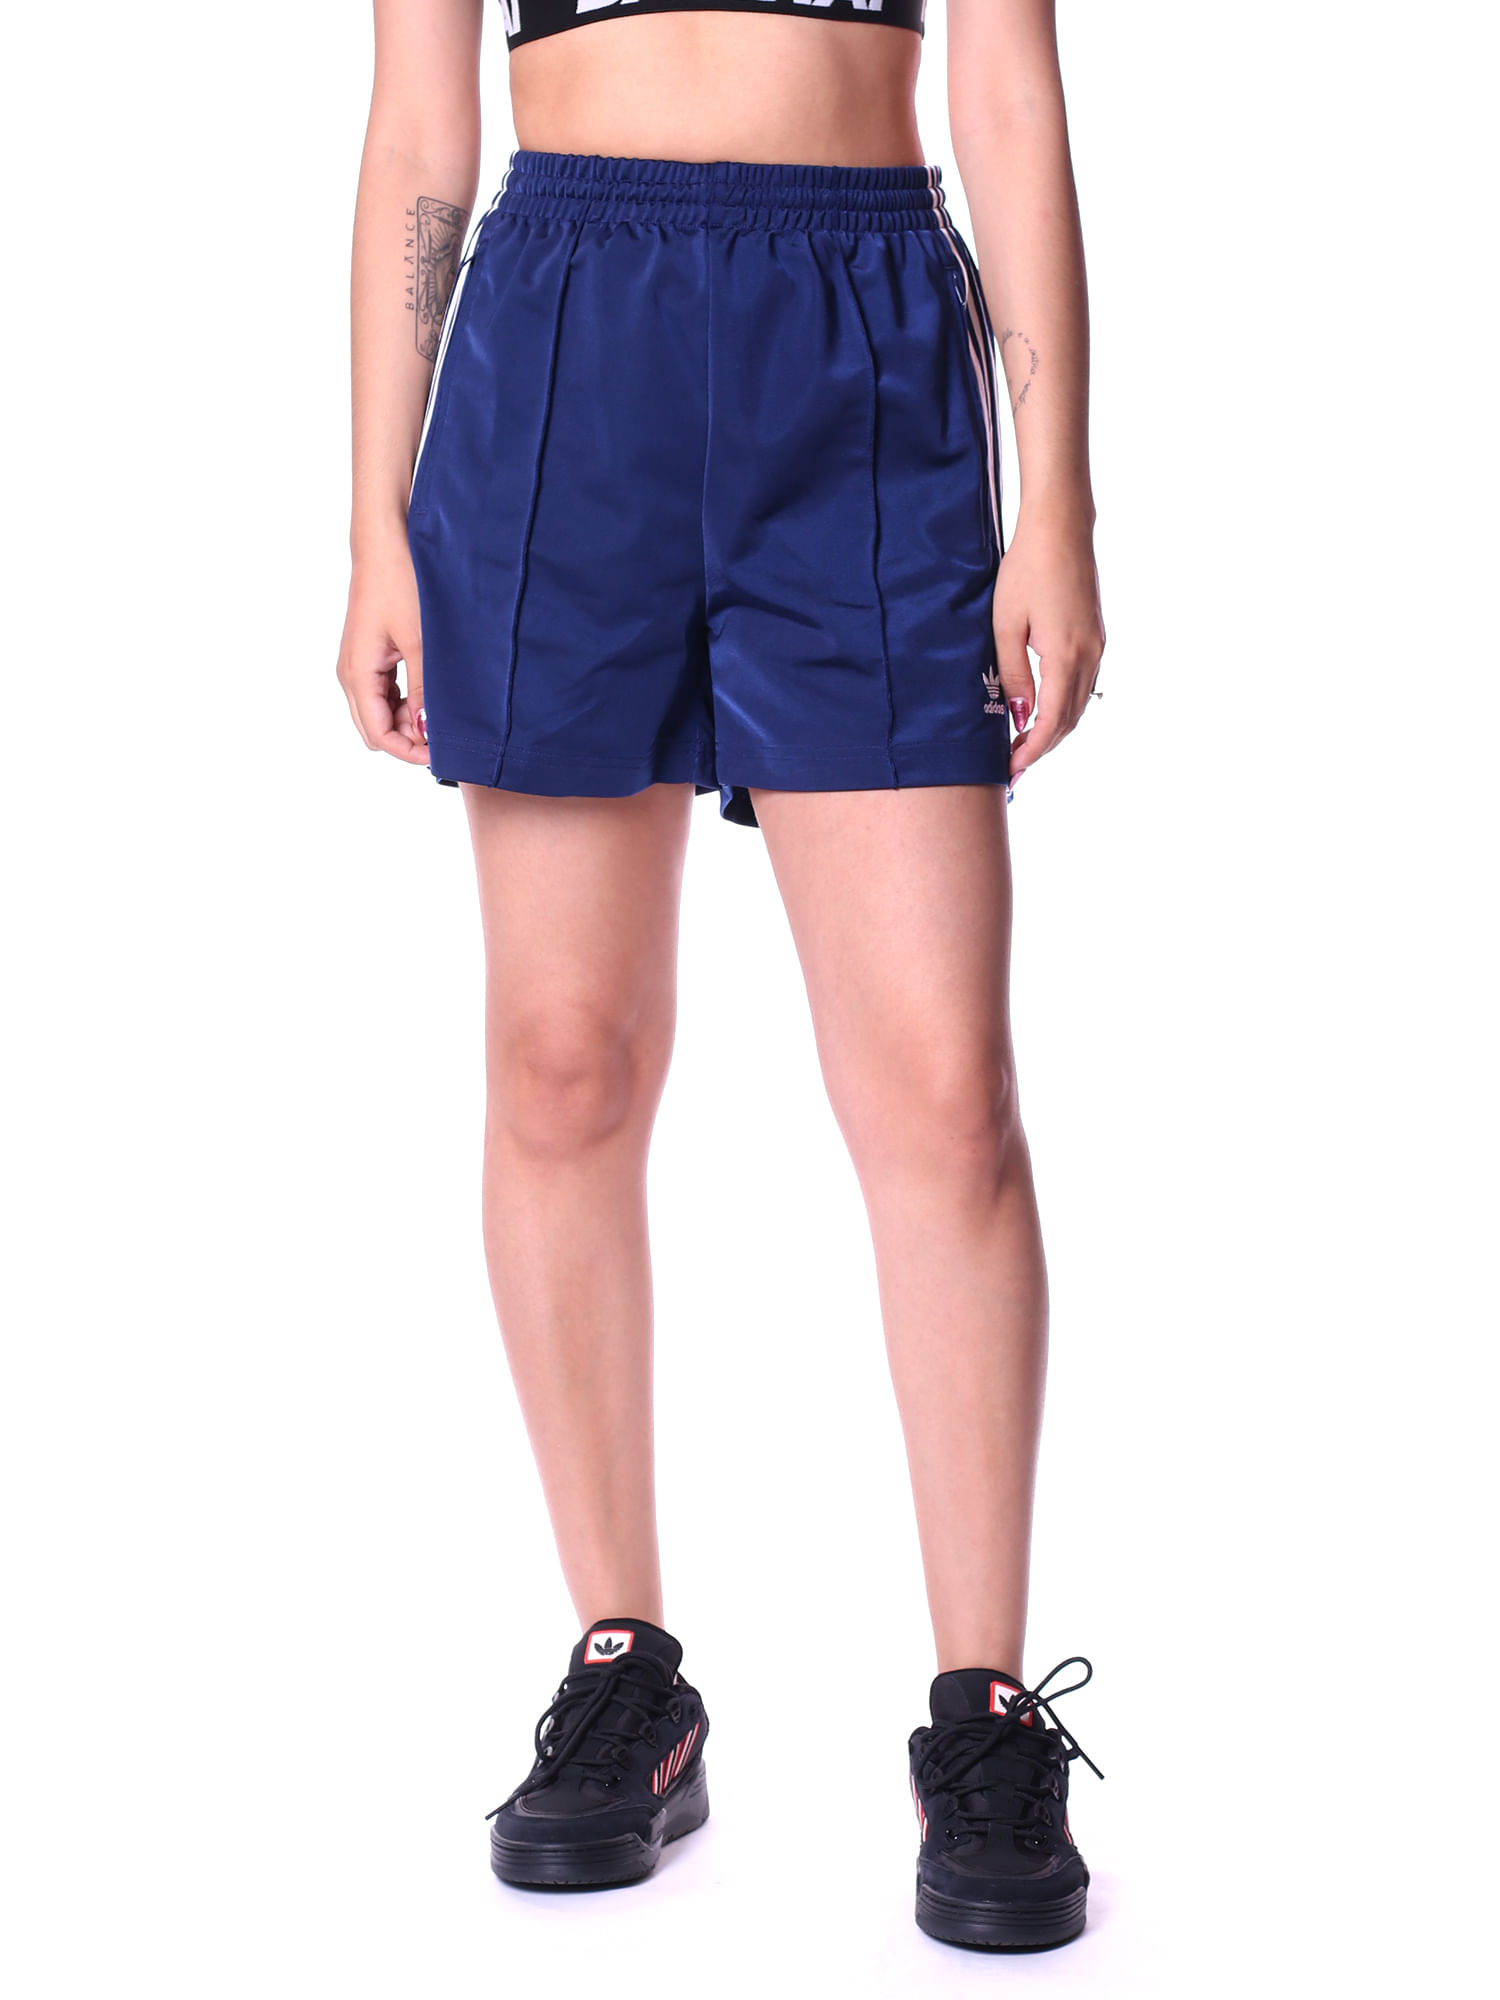 Shorts-adidas-firebird-Azul-marinho